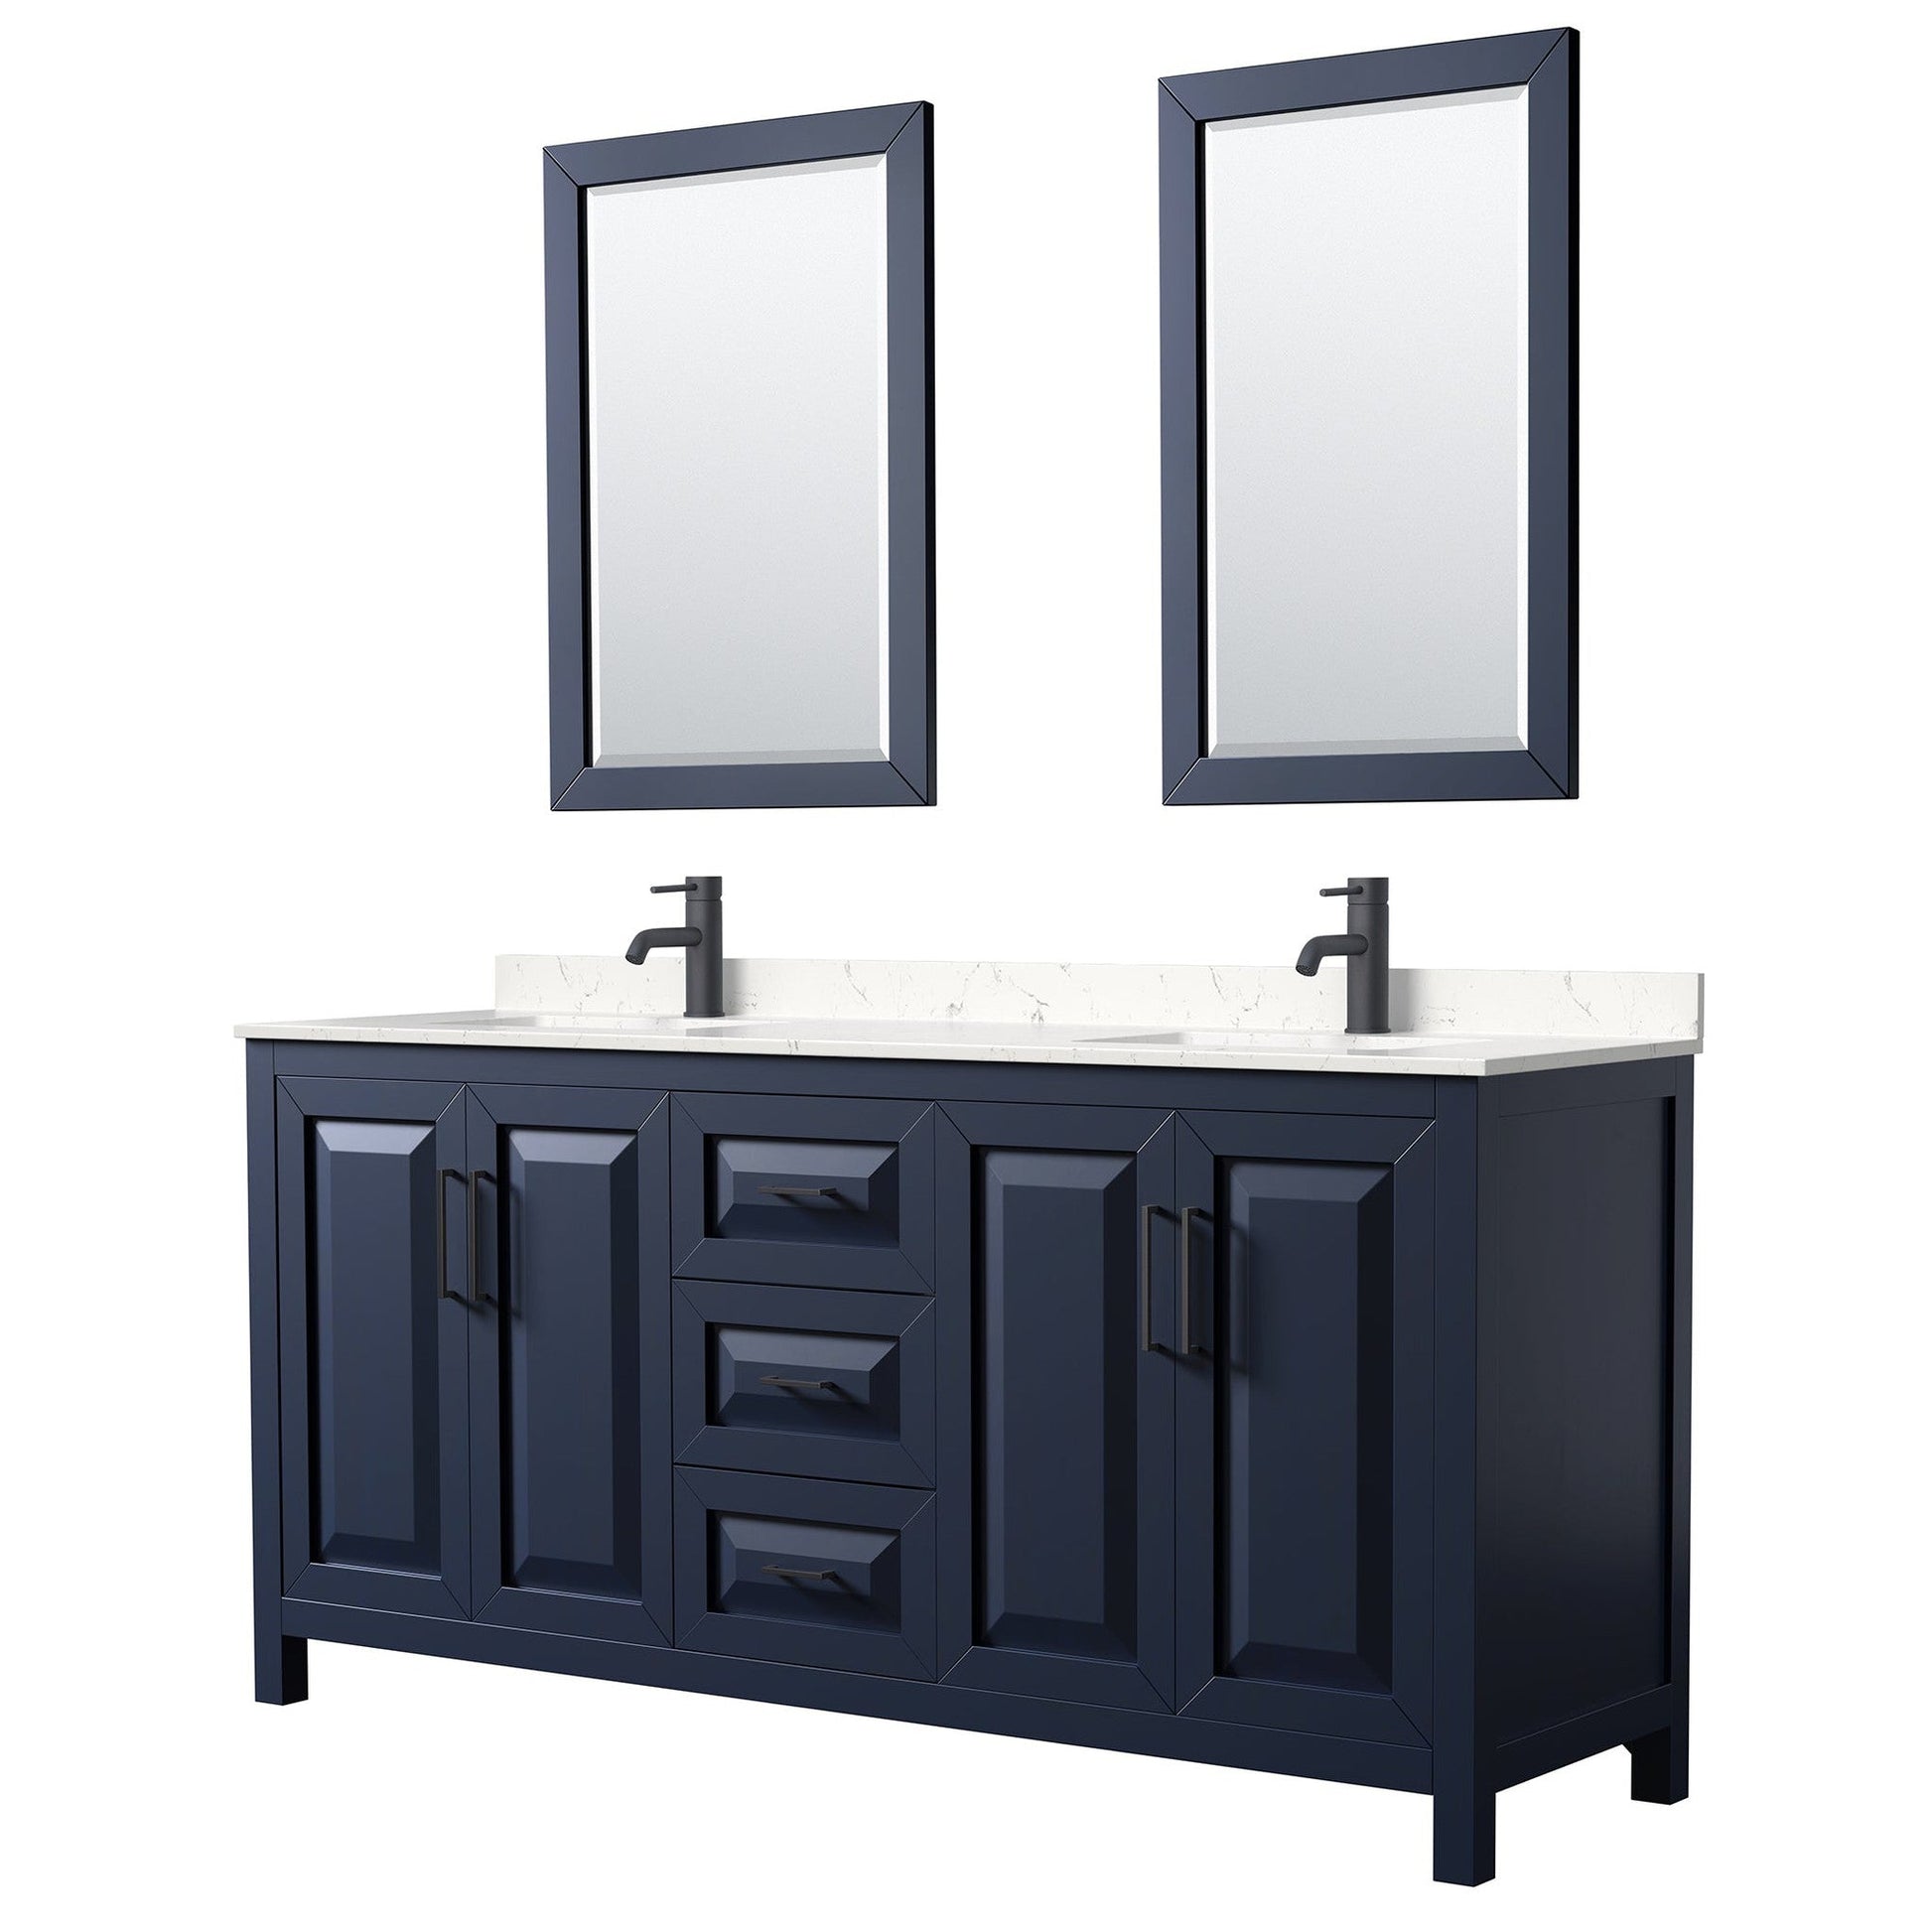 Daria 72" Double Bathroom Vanity in Dark Blue, Carrara Cultured Marble Countertop, Undermount Square Sinks, Matte Black Trim, 24" Mirrors